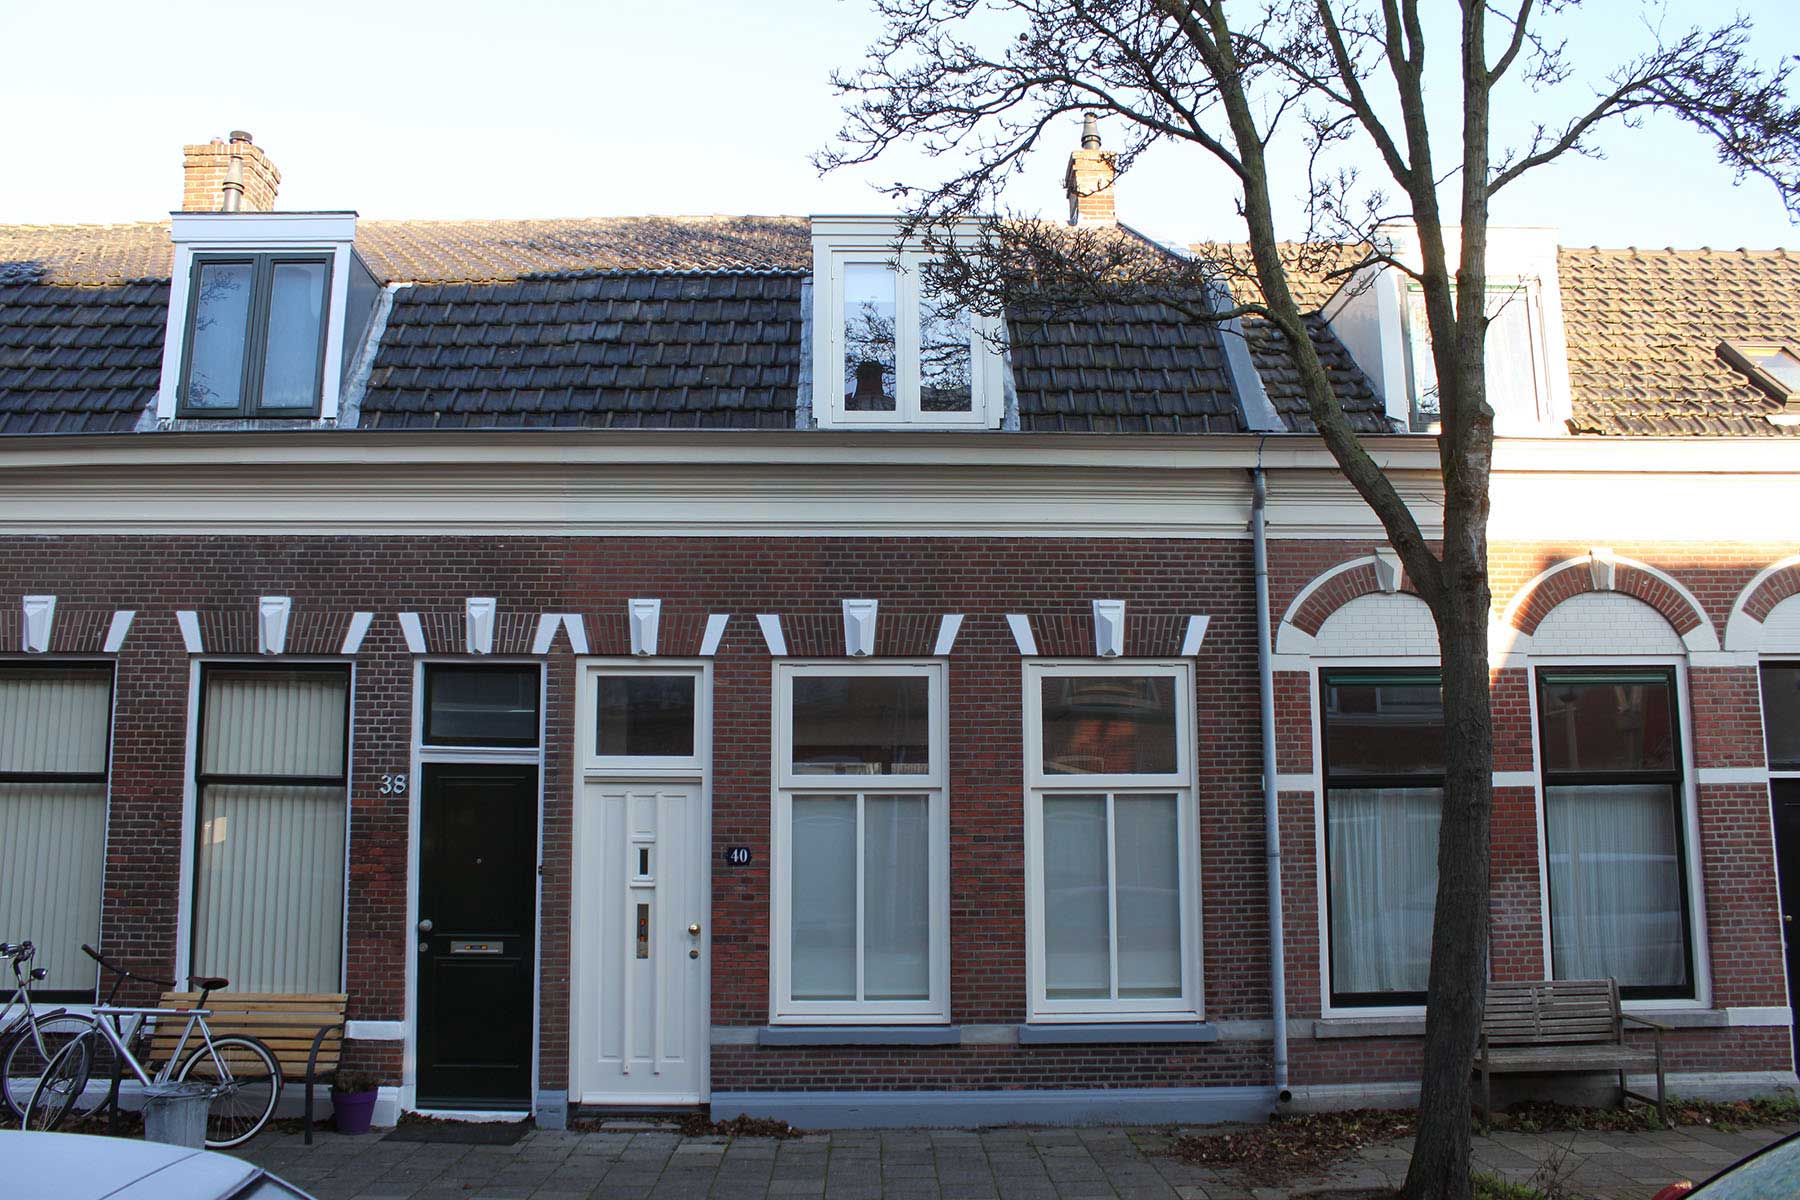 8A Architecten - Verbouwing en interieur arbeiderswoning tot 'Pied a Terre', Leiden